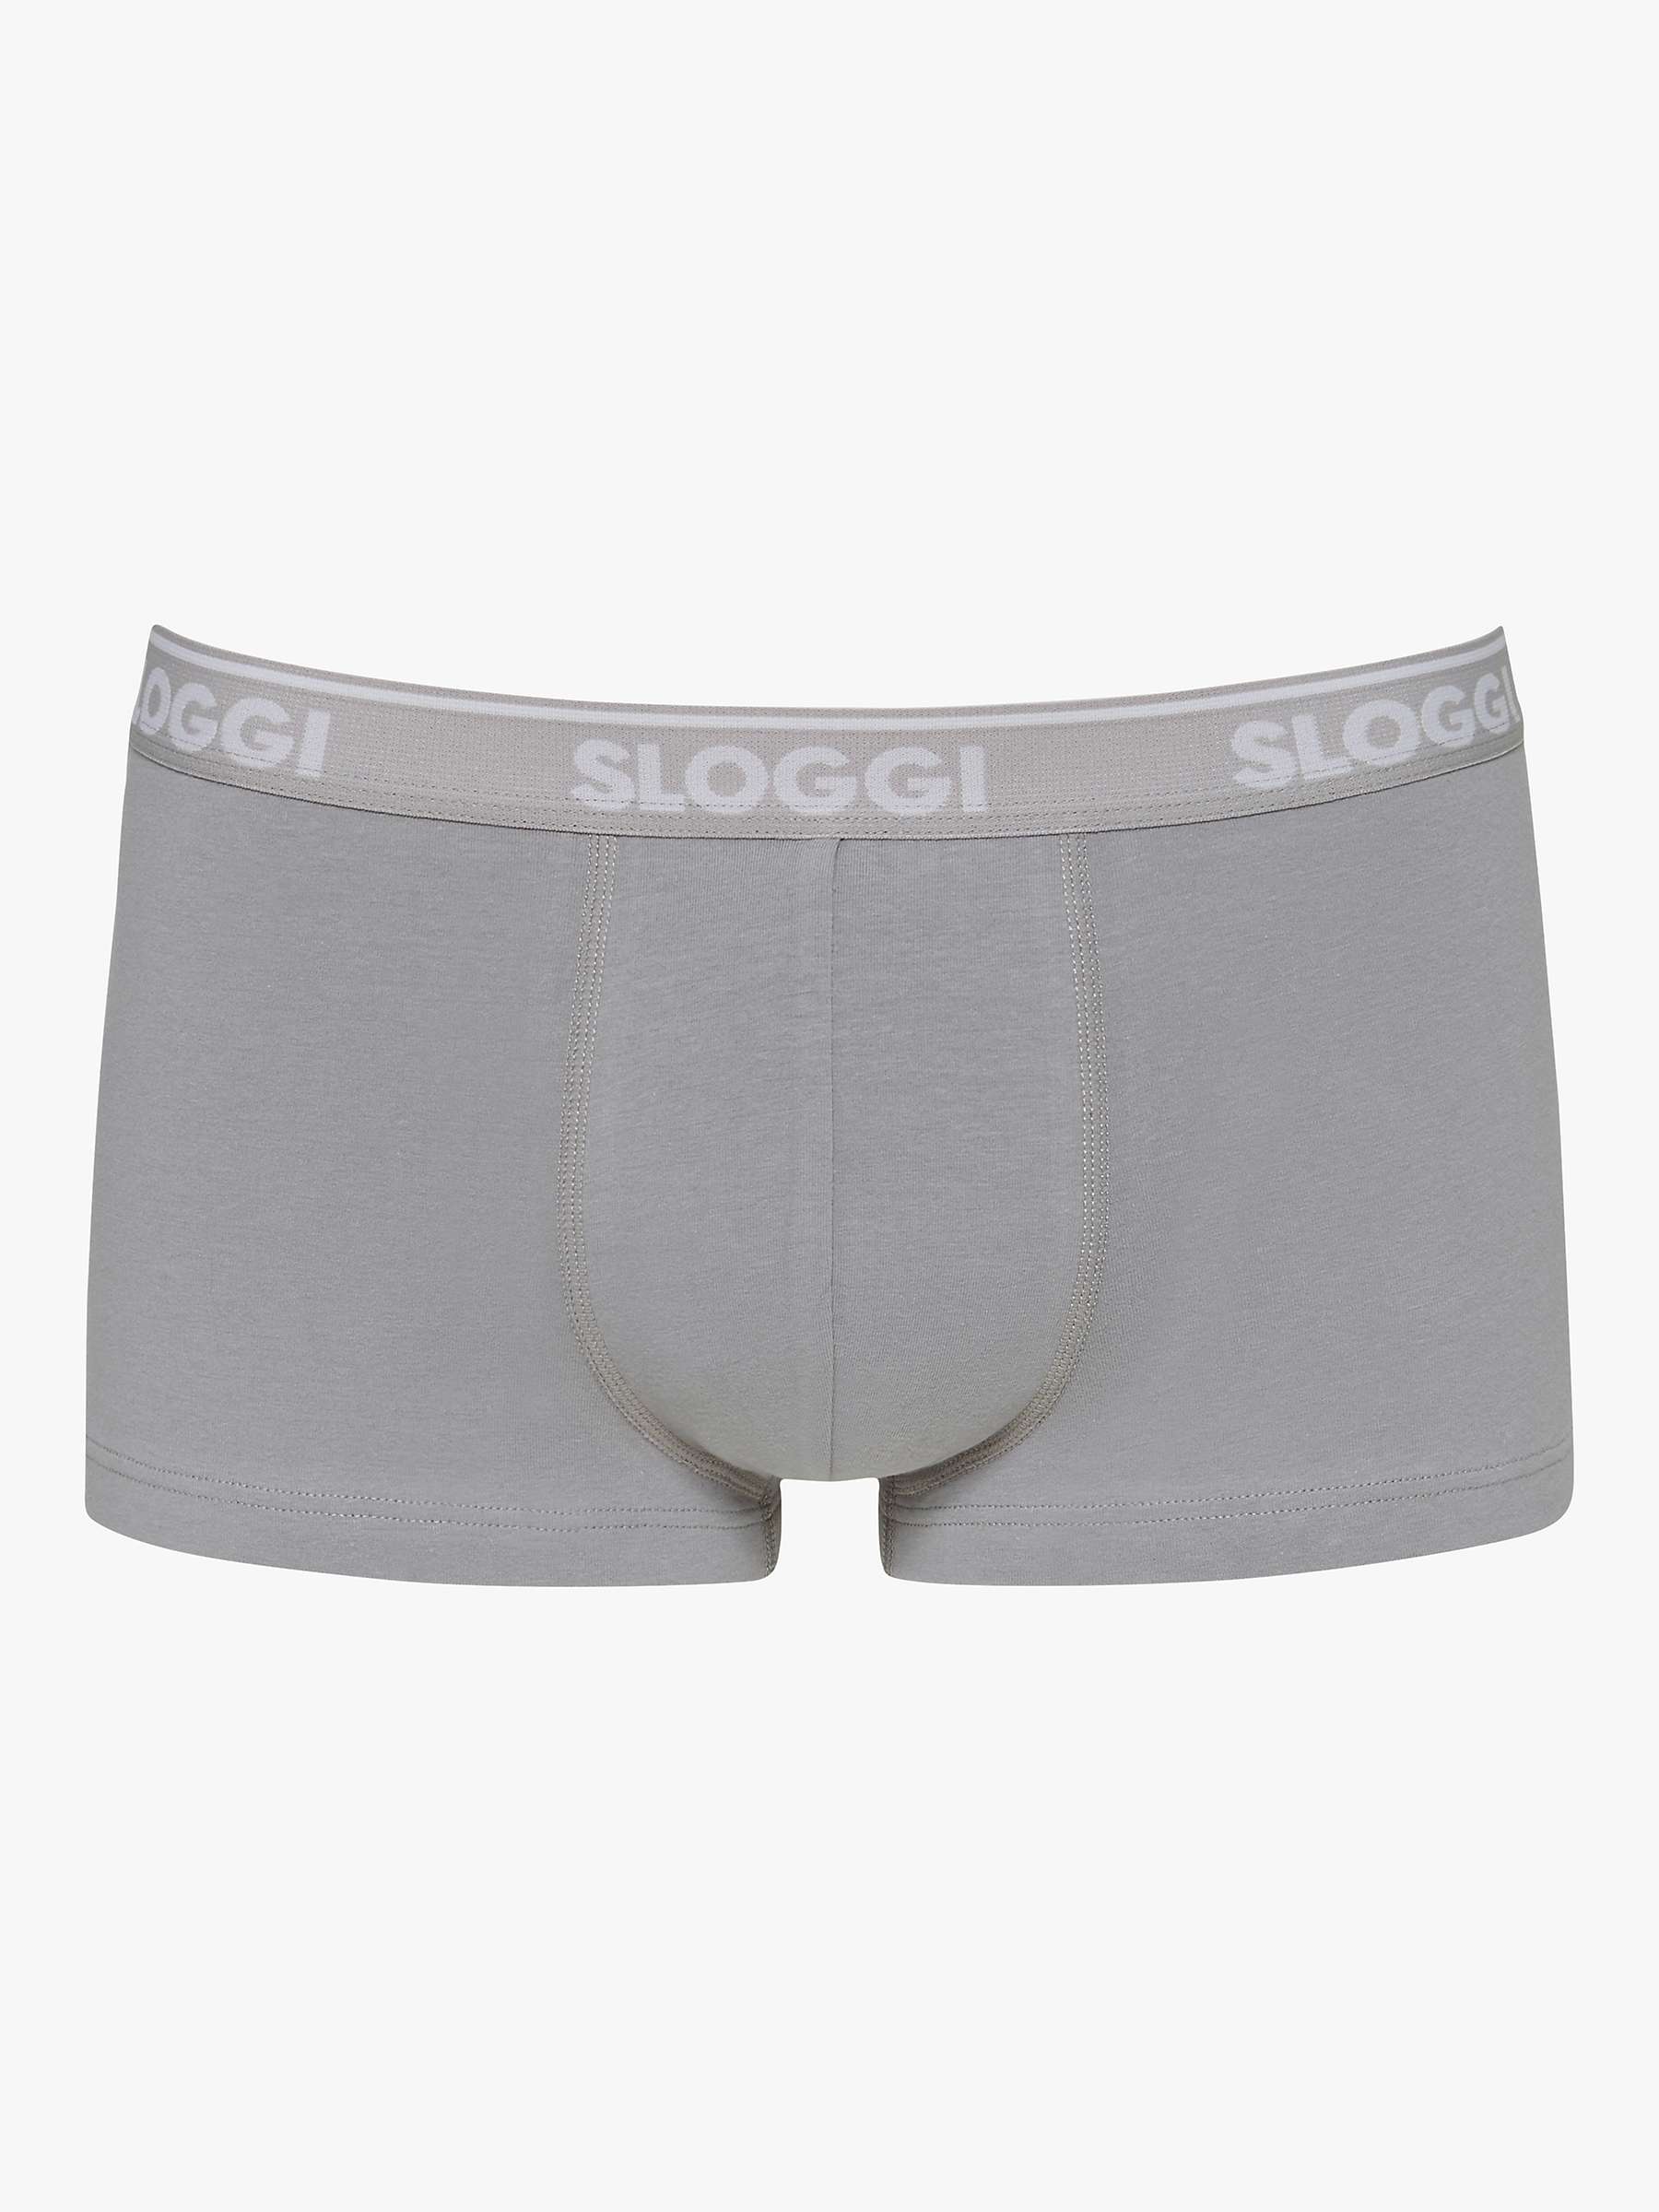 Buy sloggi Go ABC Cotton Stretch Short Briefs, Pack of 6, Stone Grey Online at johnlewis.com